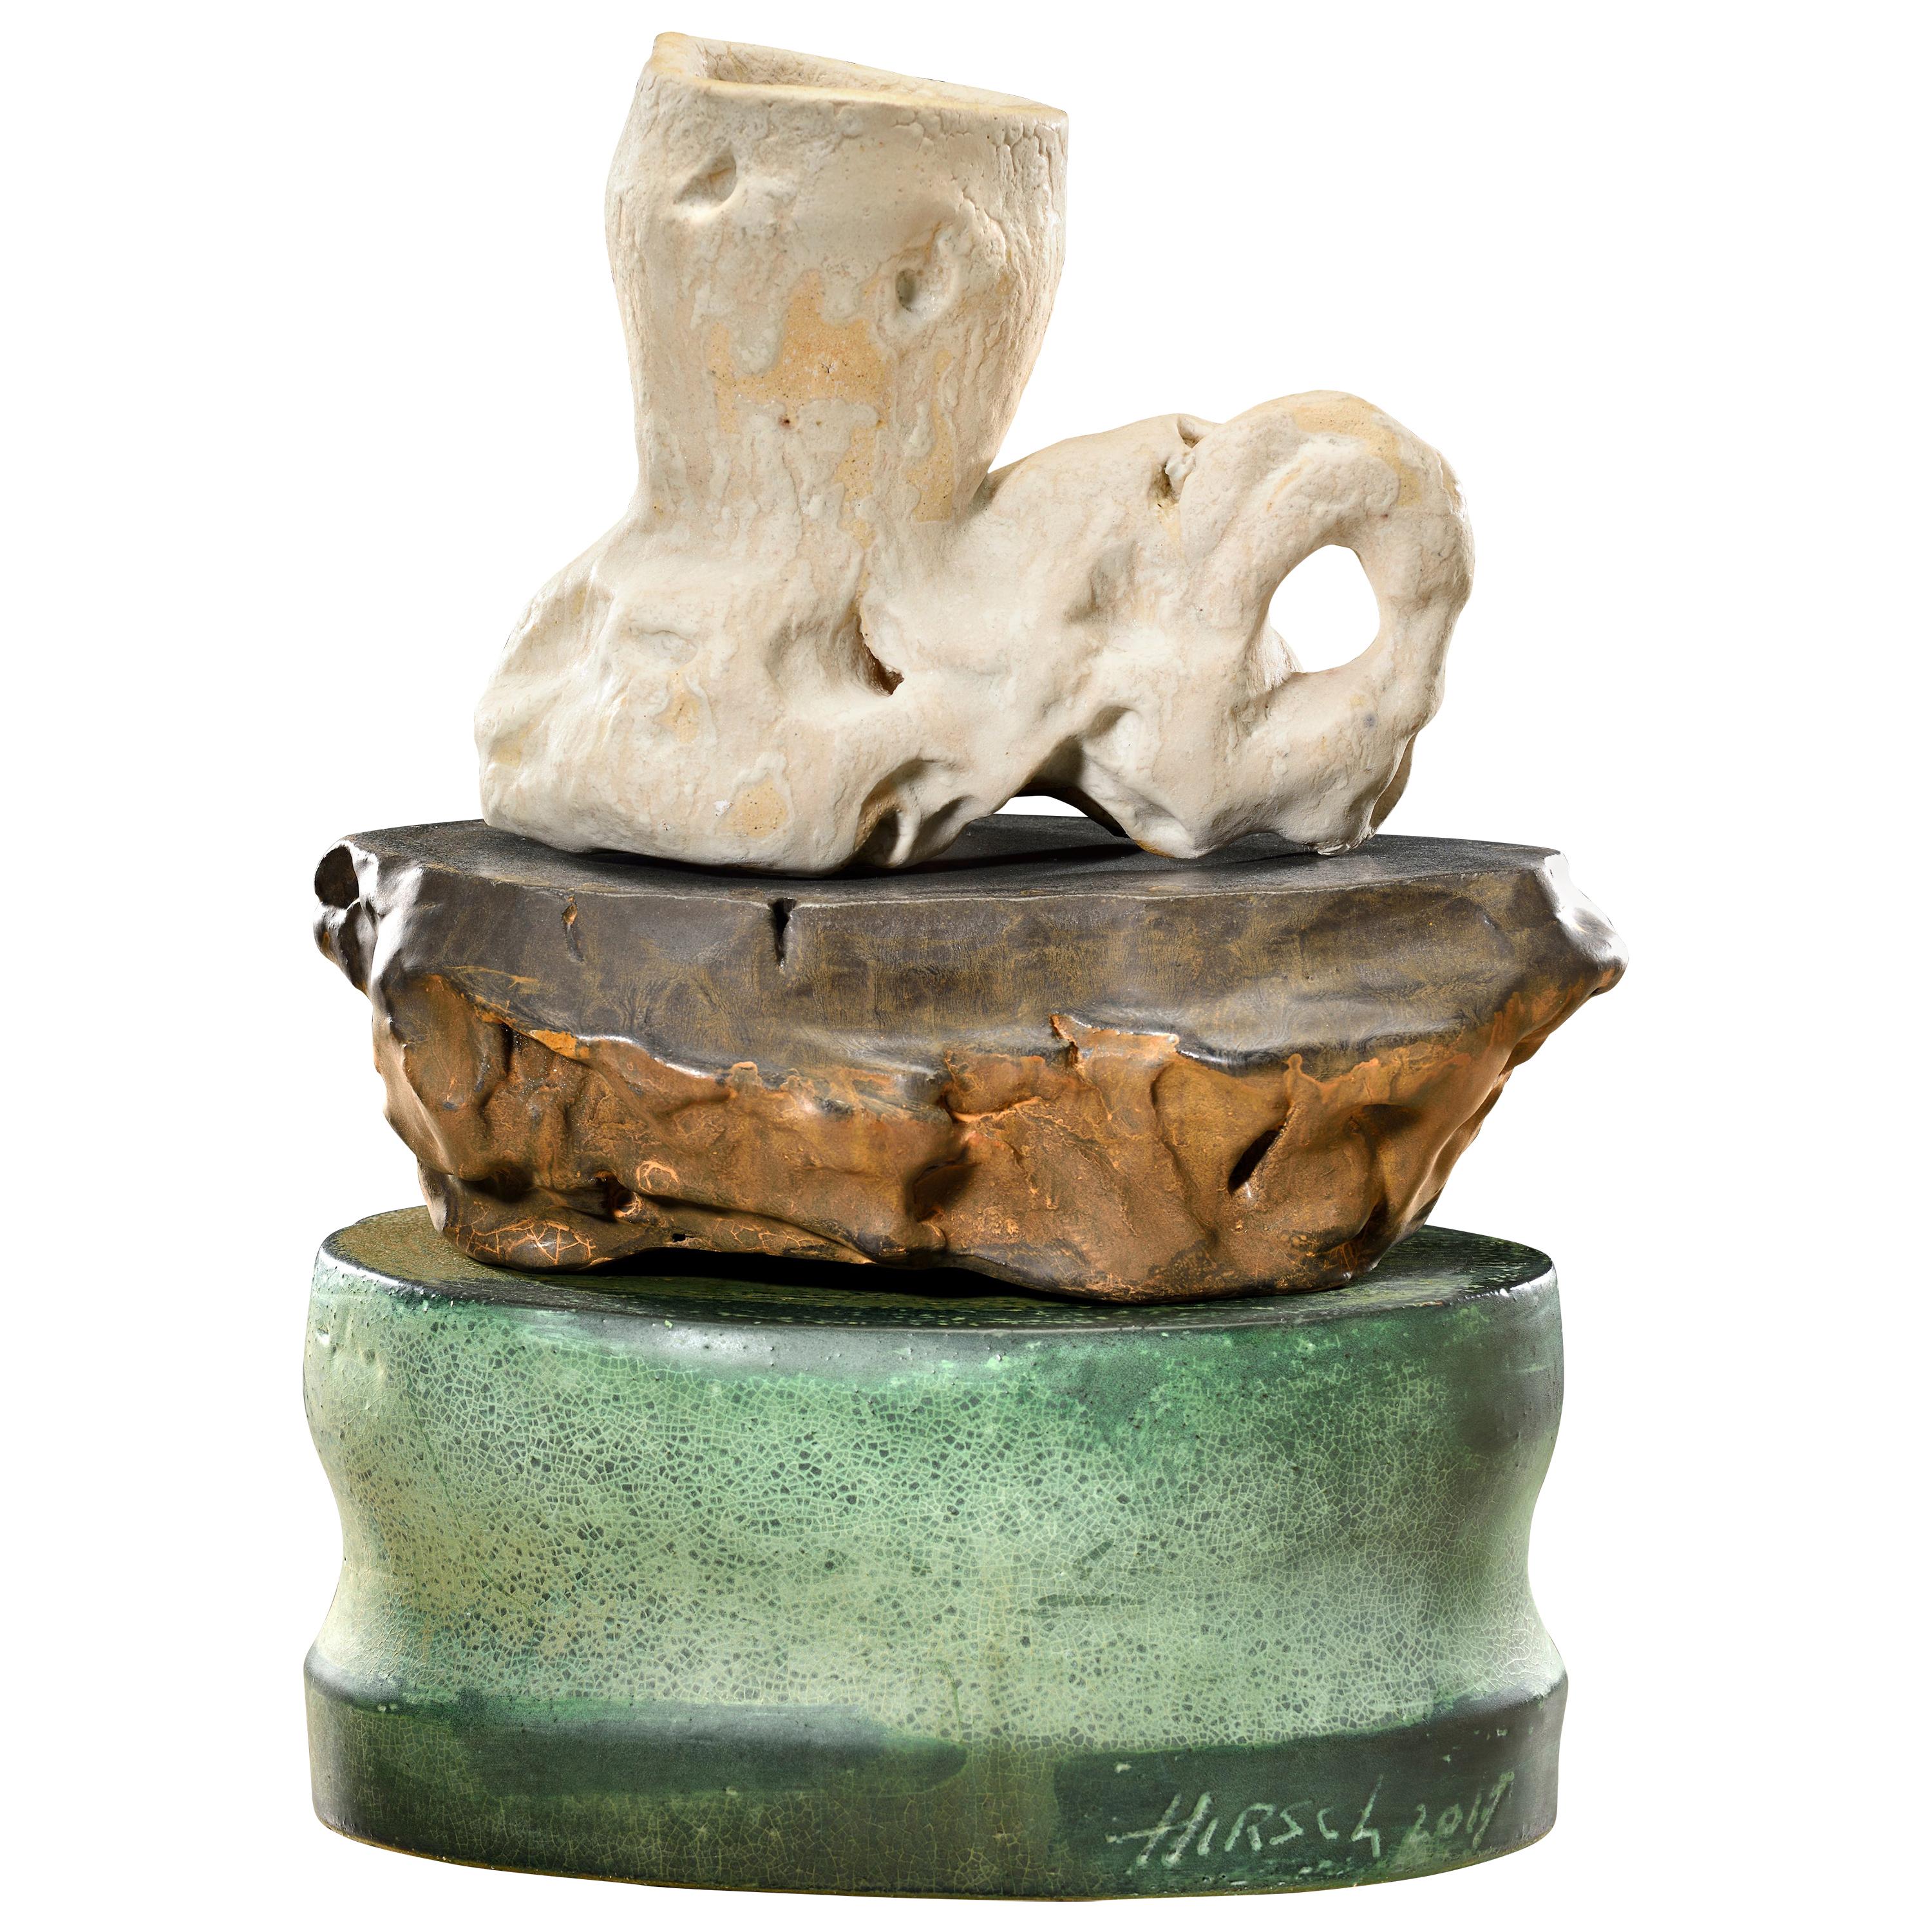 Richard Hirsch Ceramic Scholar Rock Cup Sculpture #32, 2017 - 2018 For Sale